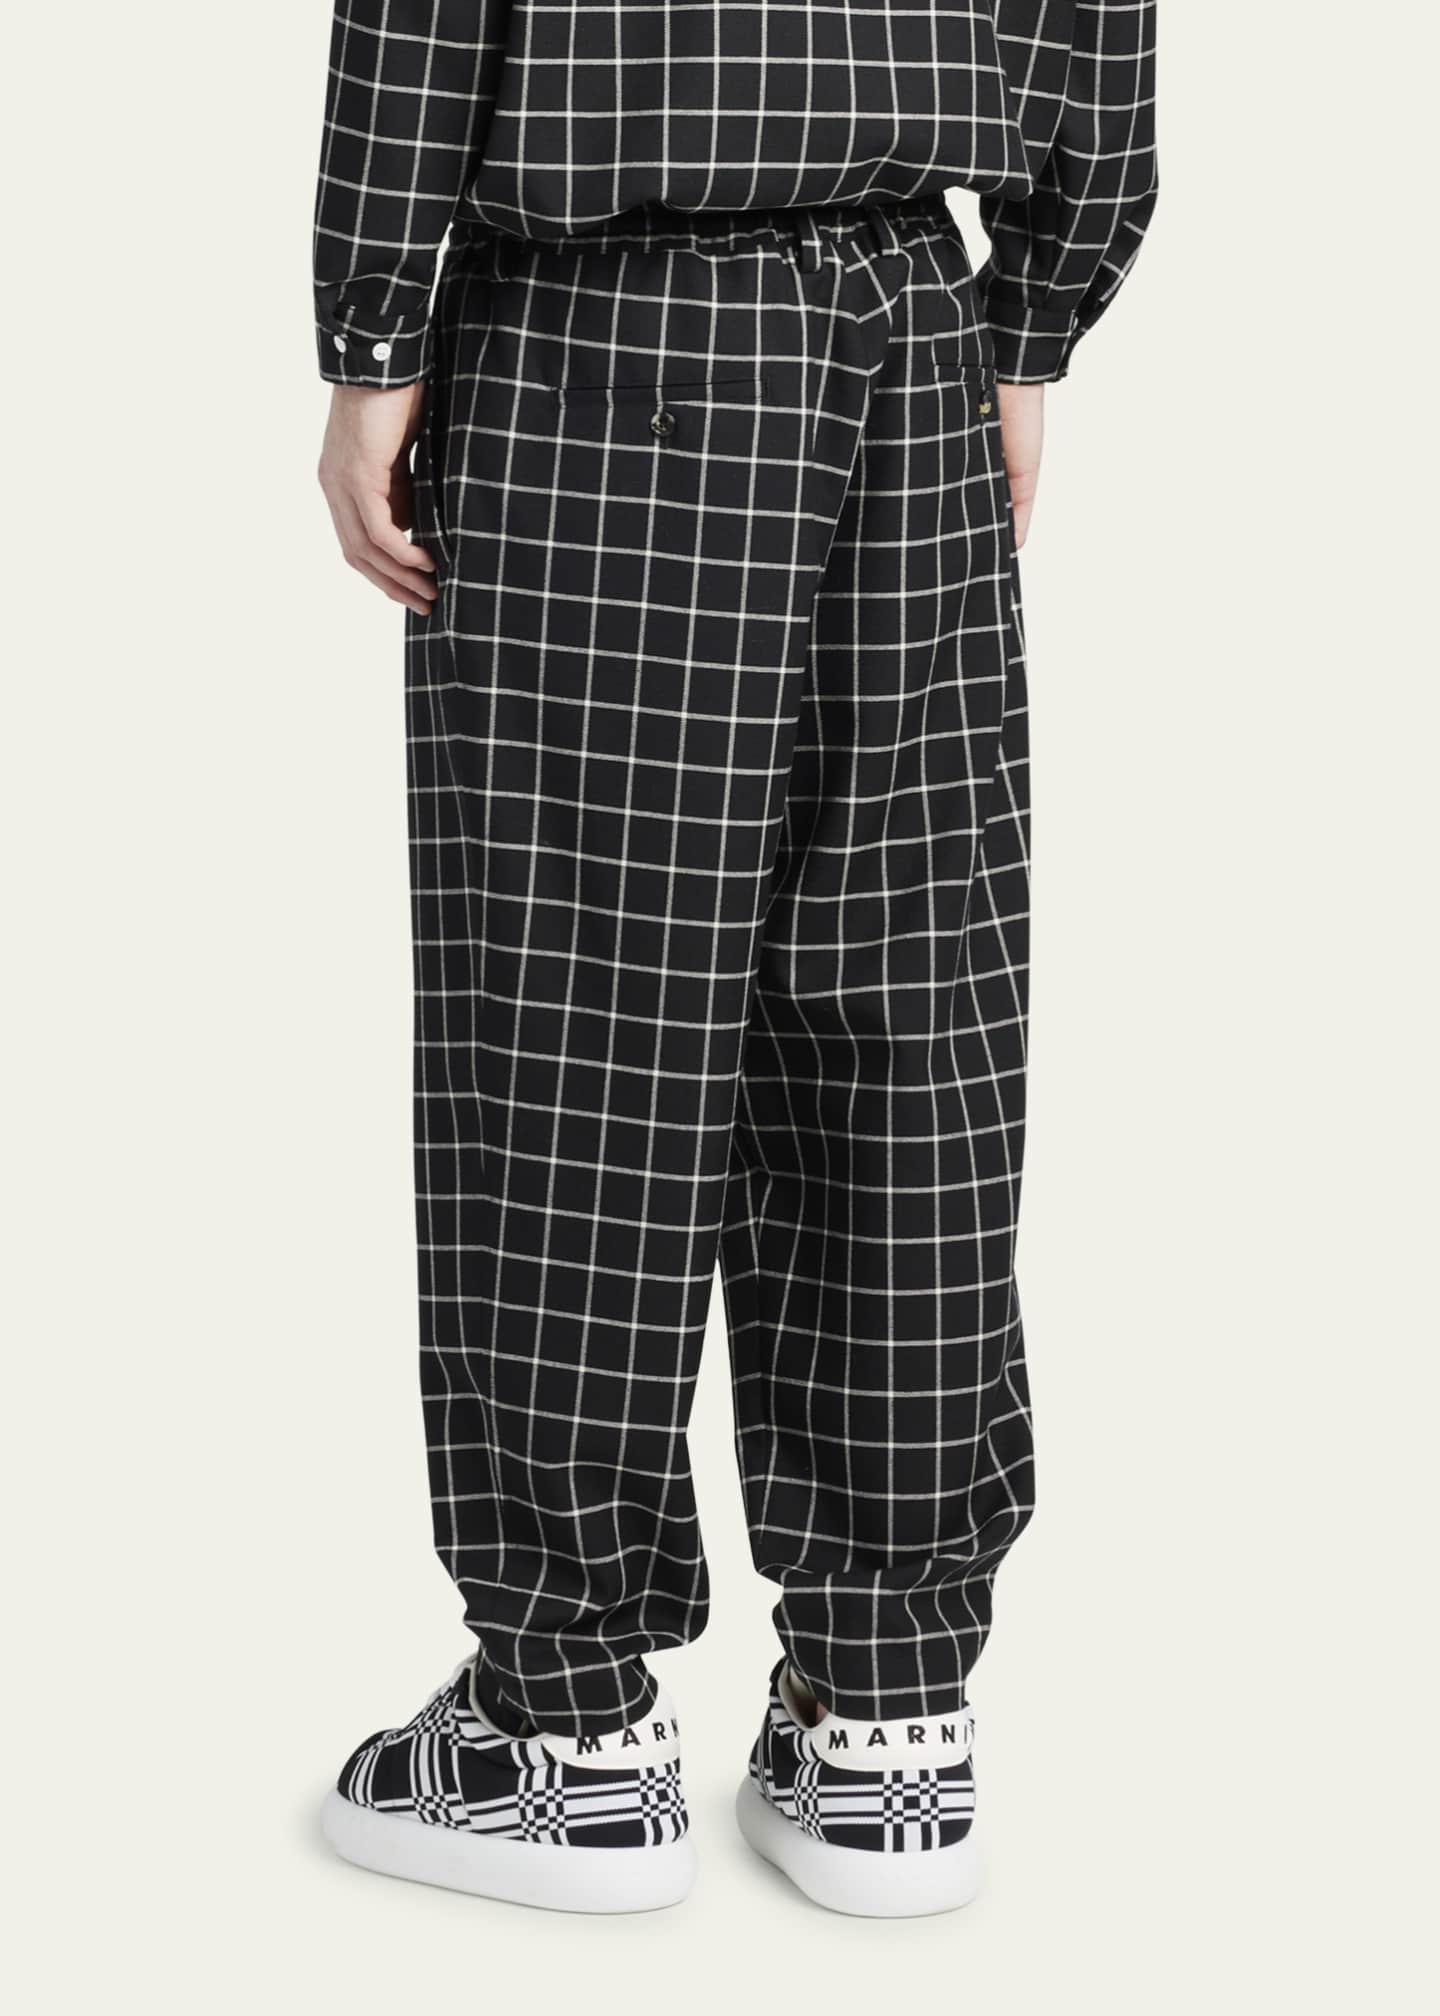 Marni Men's Baggy Pleated Grid Check Pants - Bergdorf Goodman